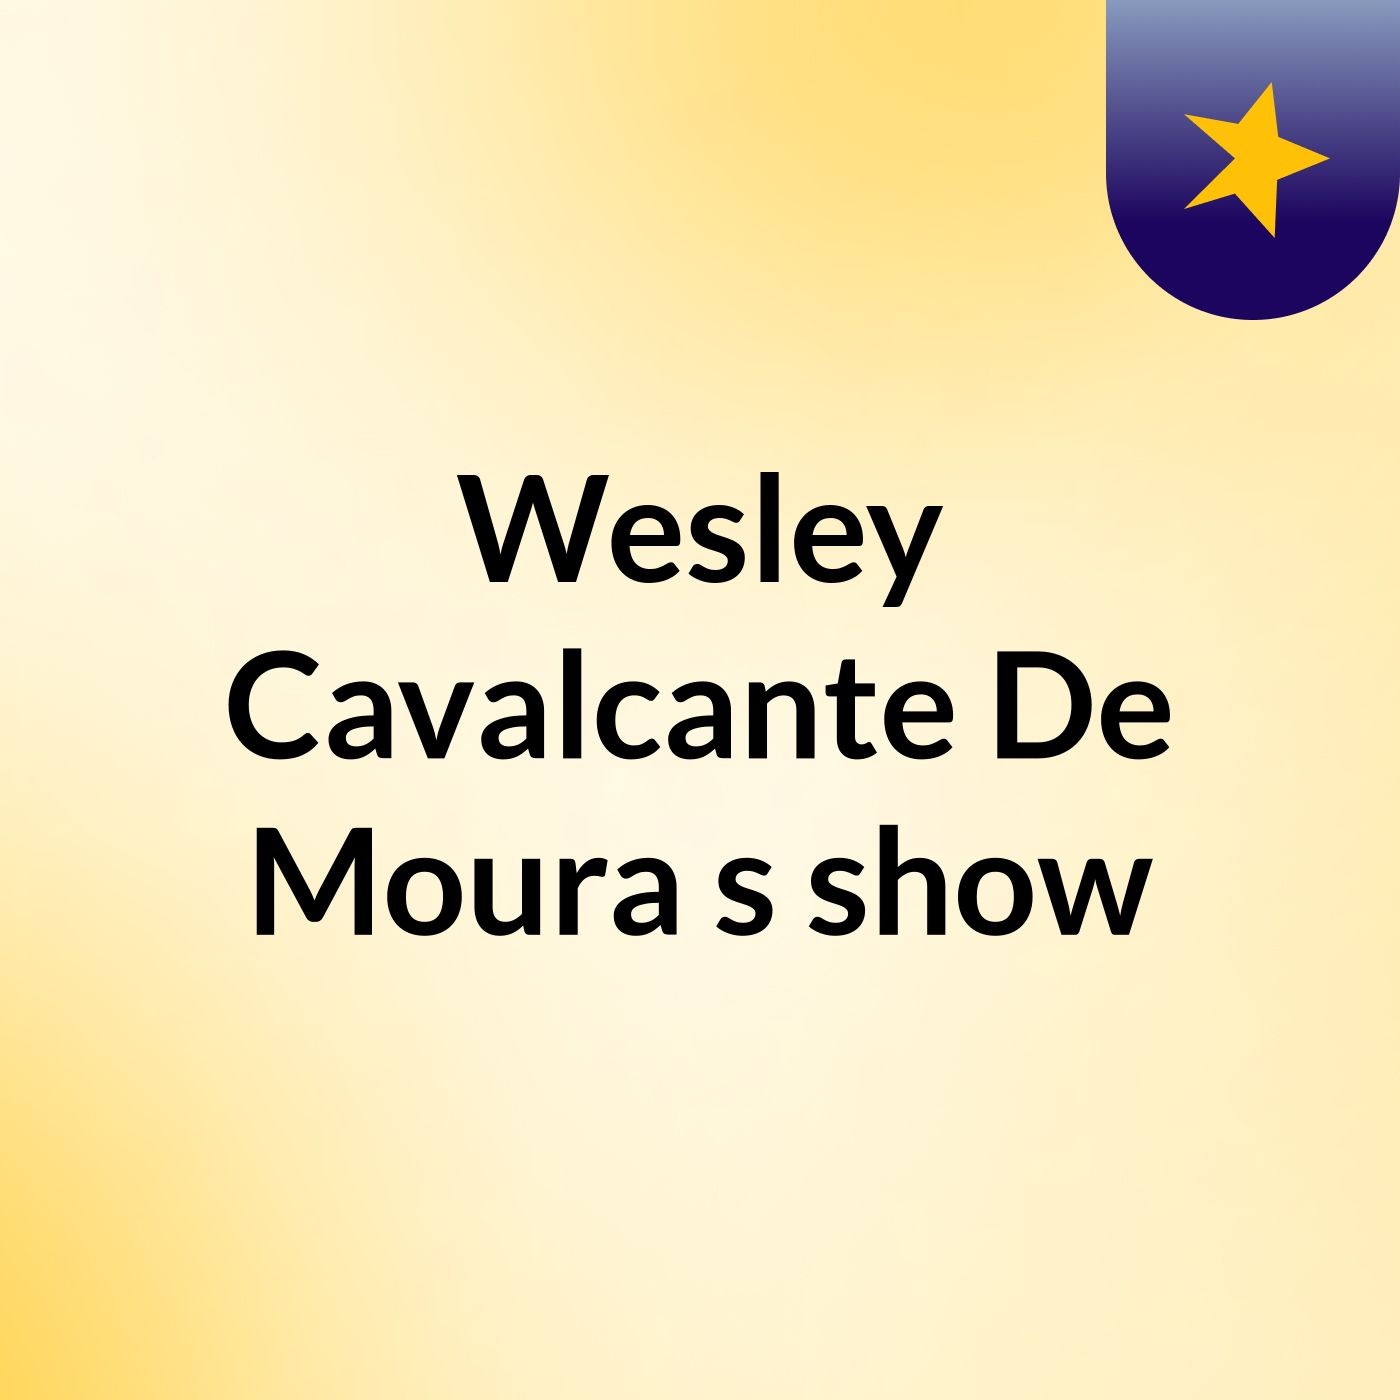 Wesley Cavalcante De Moura's show